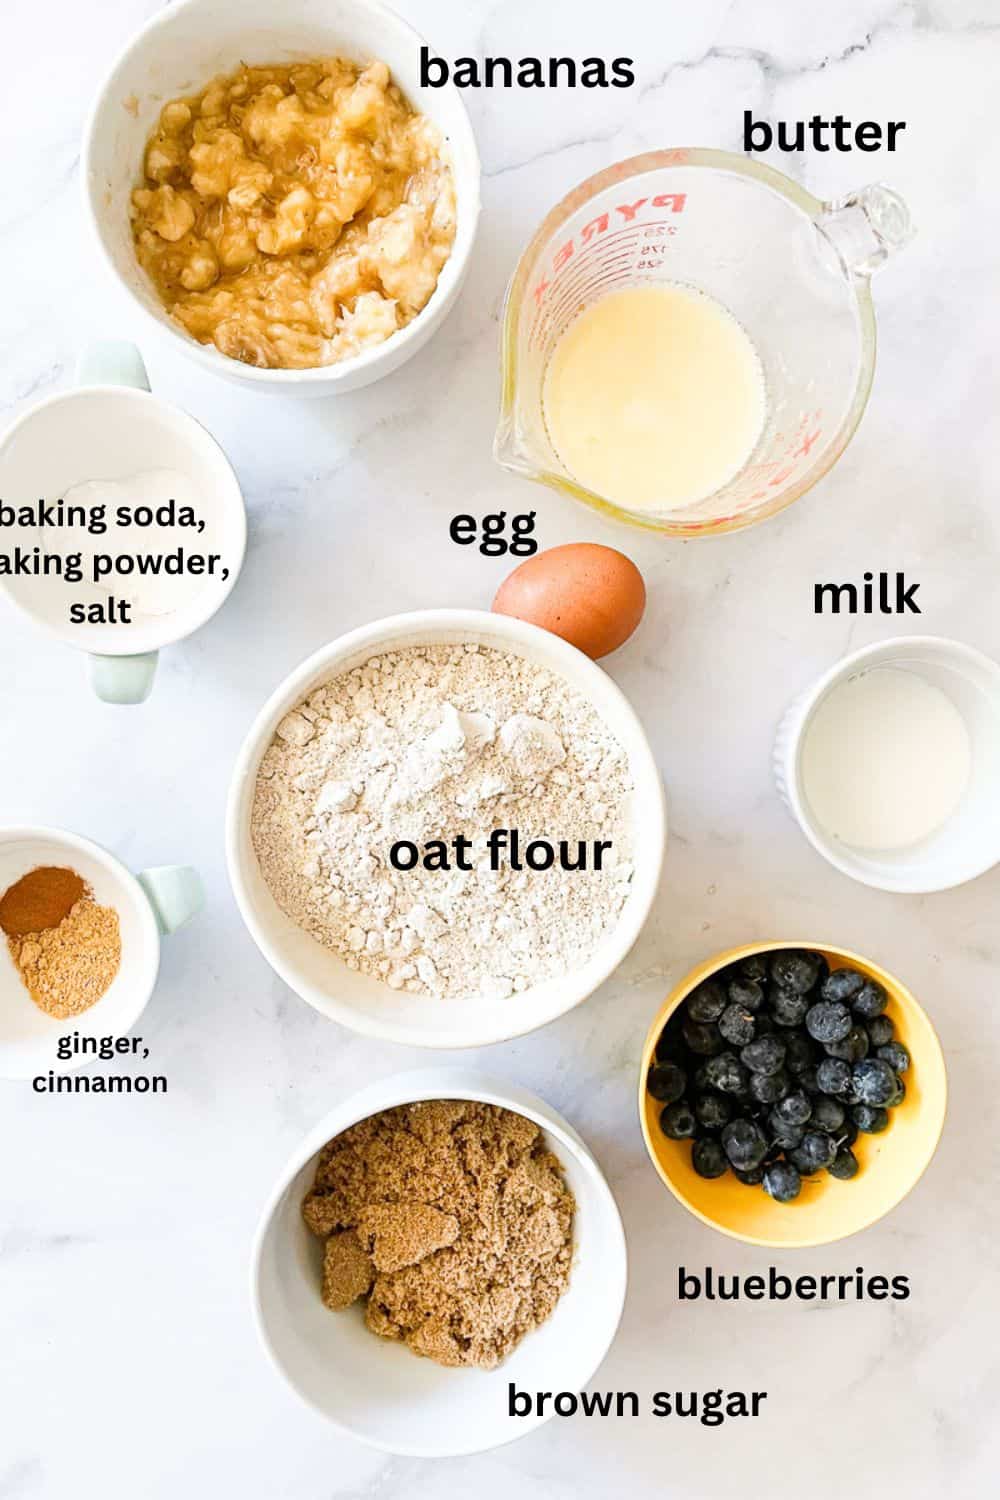 Ingredients for banana blueberry muffins are labeled and portioned: oat flour, bananas, milk, butter, baking powder, baking soda, ginger, cinnamon, salt, blueberries, egg, brown sugar, bananas.